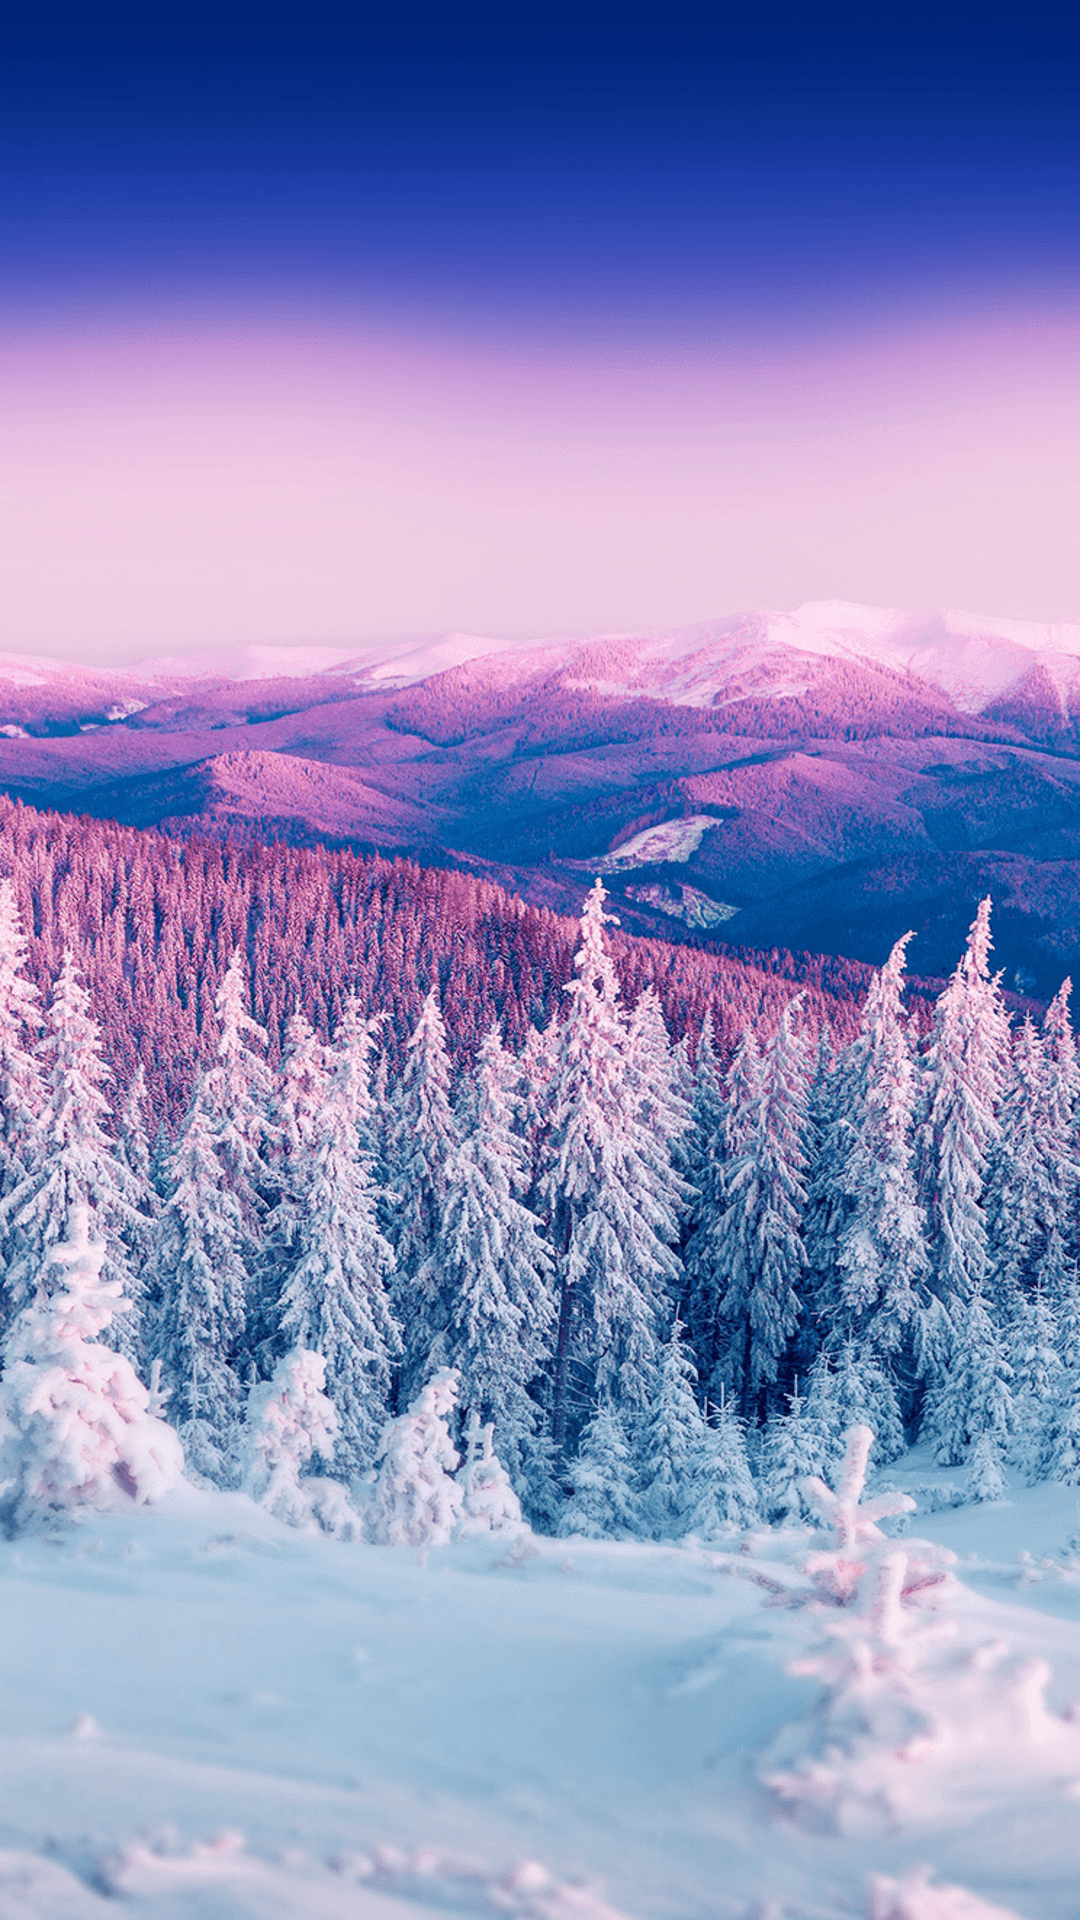  Berge Winter Hintergrundbild 1080x1920. winter wallpaper:Amazon.de:Appstore for Android